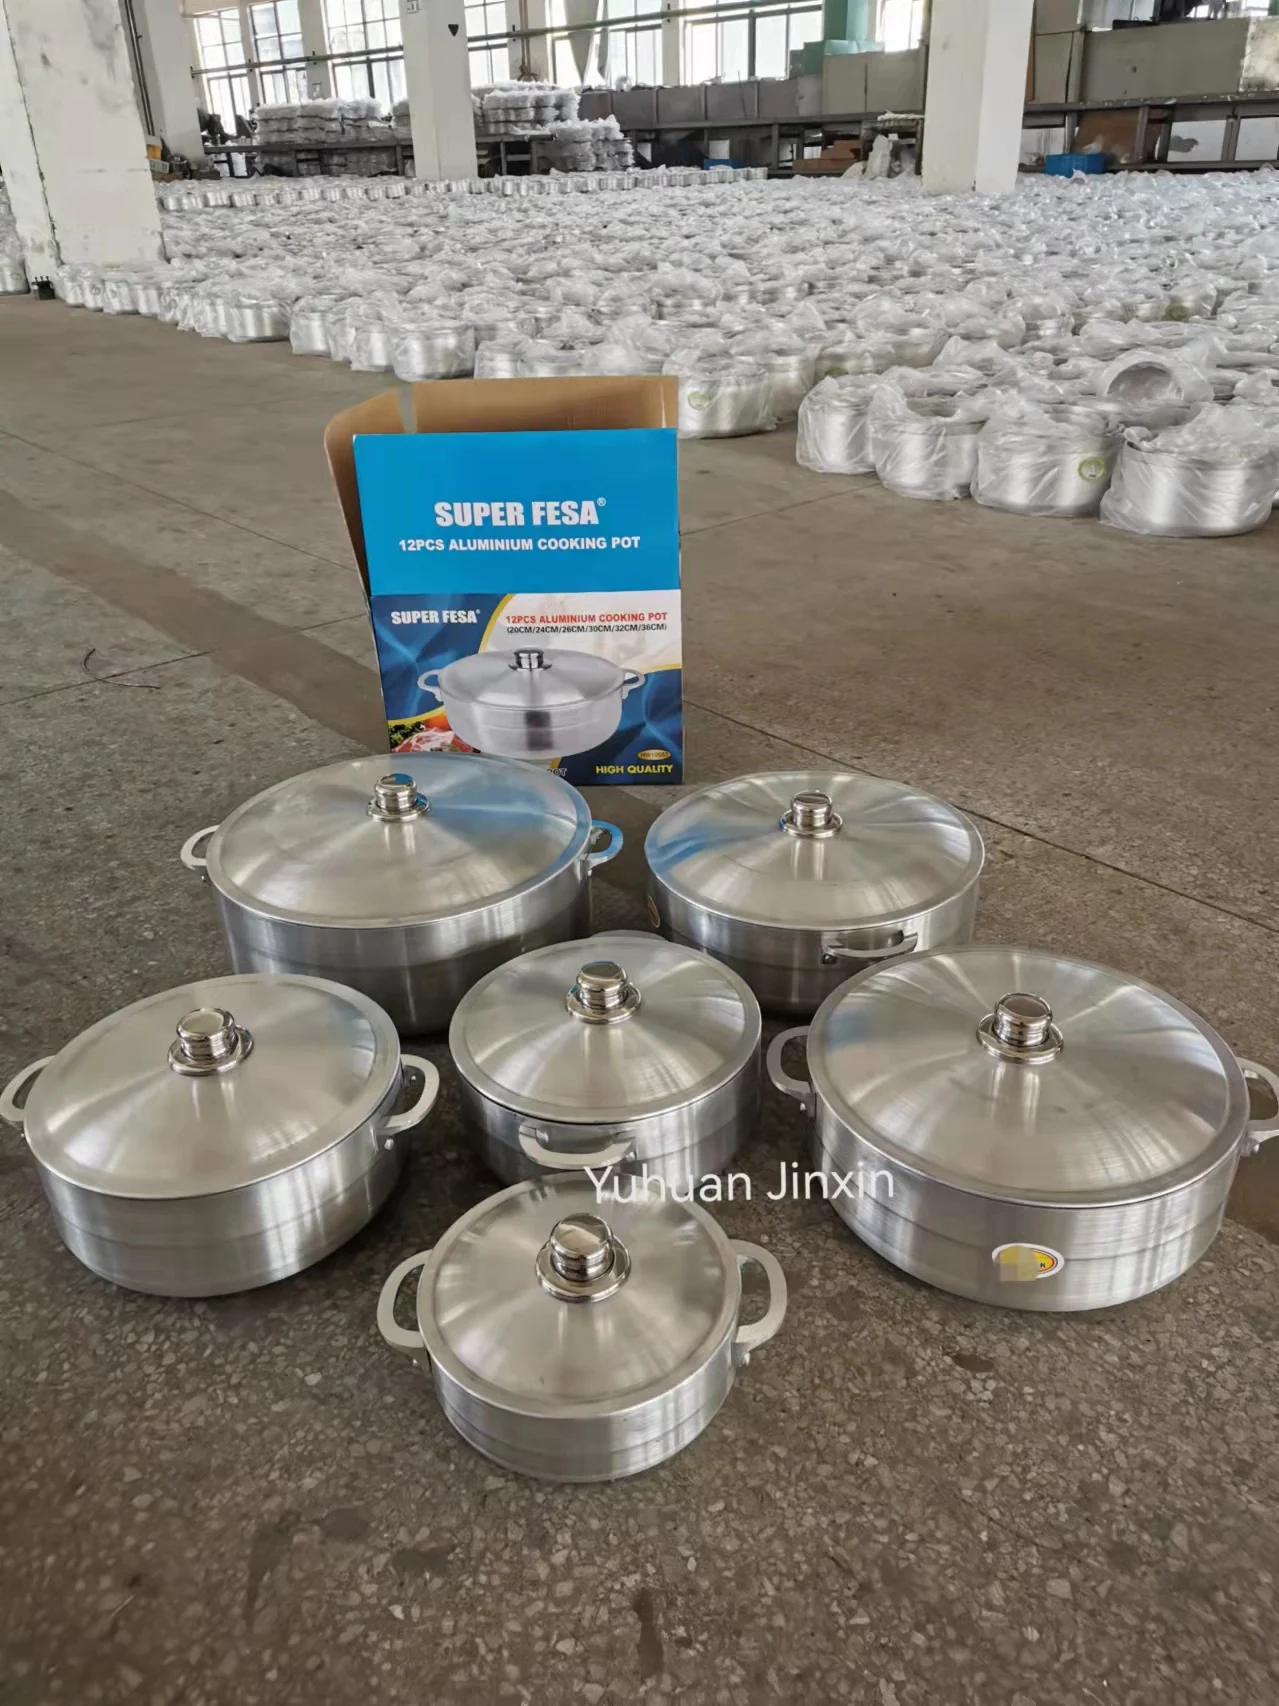 24cm Aluminum Stock Pot/Caldero Cookware Set - China Cookware and Casserole  price